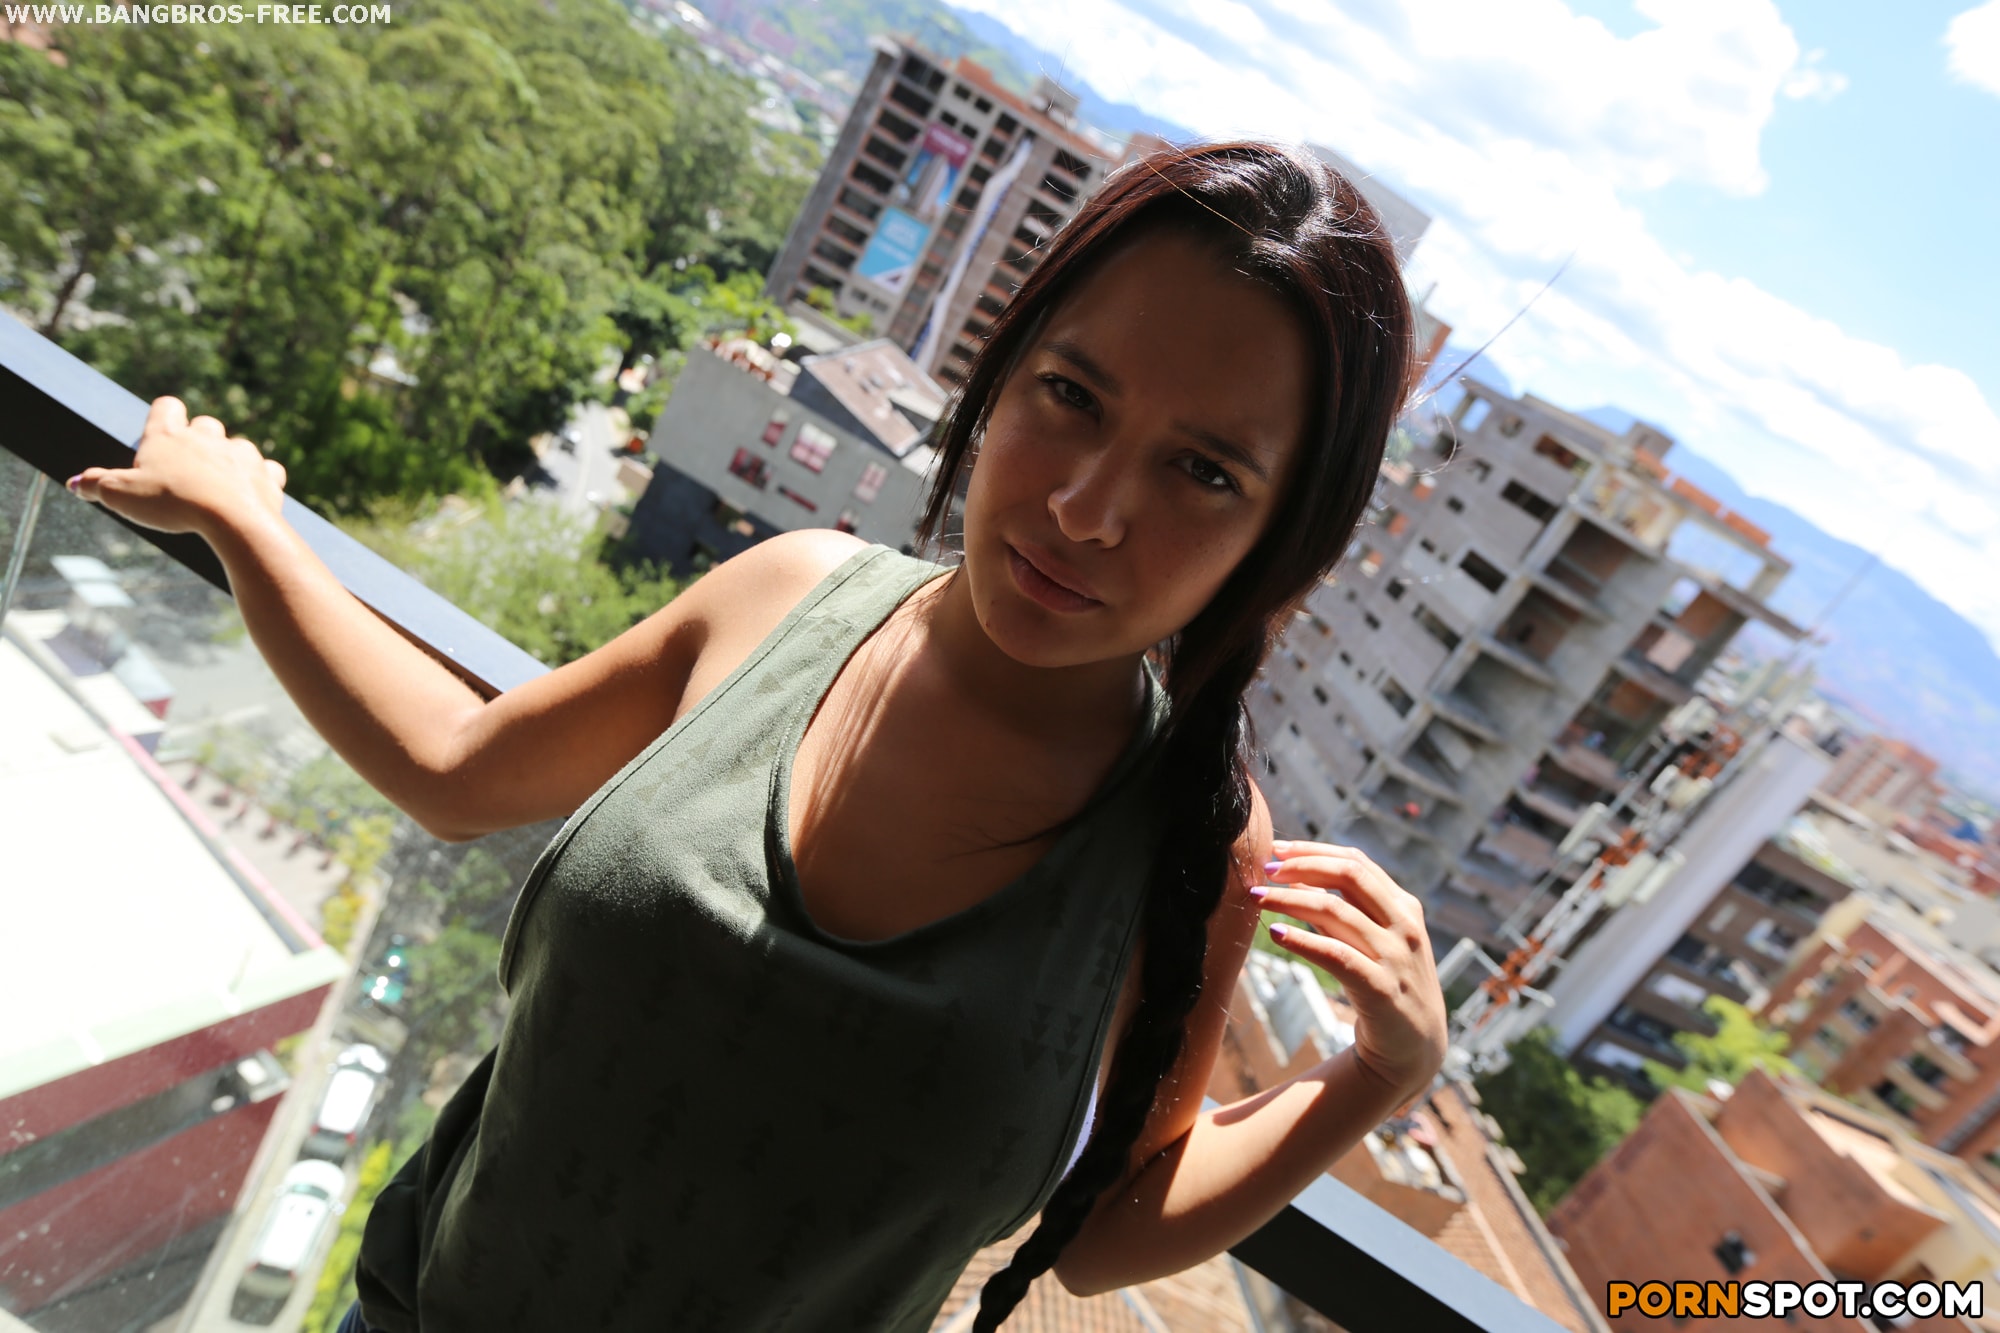 Bangbros 'Colombian college student Jessica fucked' starring Jesica (Photo 16)